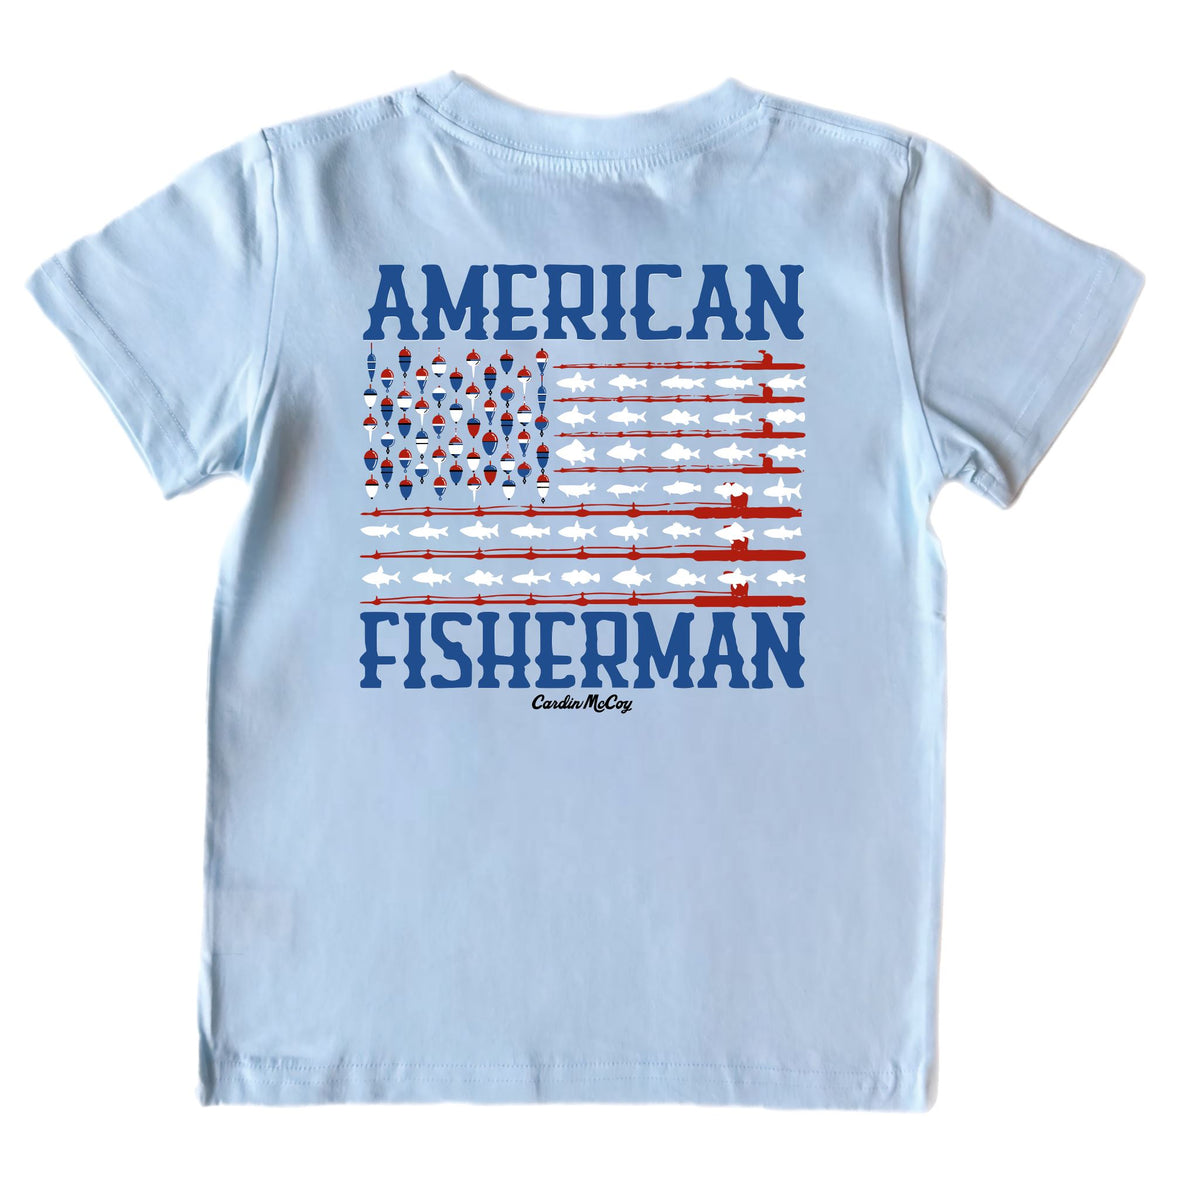 Boys' American Fisherman Short-Sleeve Tee Short Sleeve T-Shirt Cardin McCoy Cool Blue XXS (2/3) Pocket